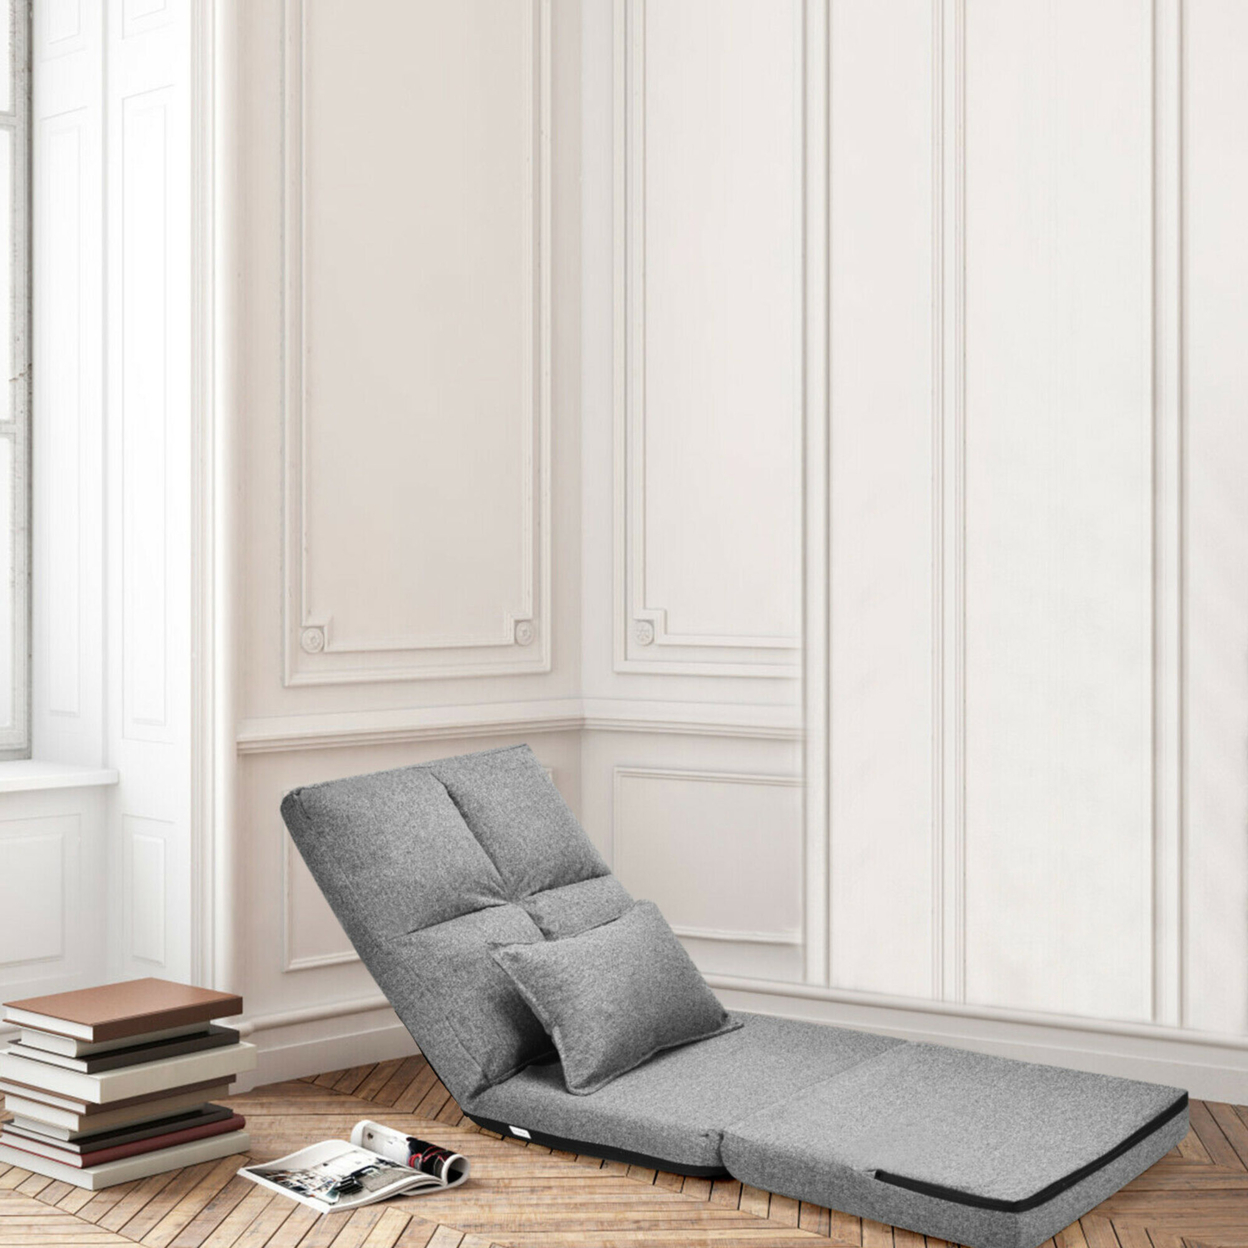 Flip Chair Convertible Sleeper Couch Futon Bed Lounger W/Pillow Grey